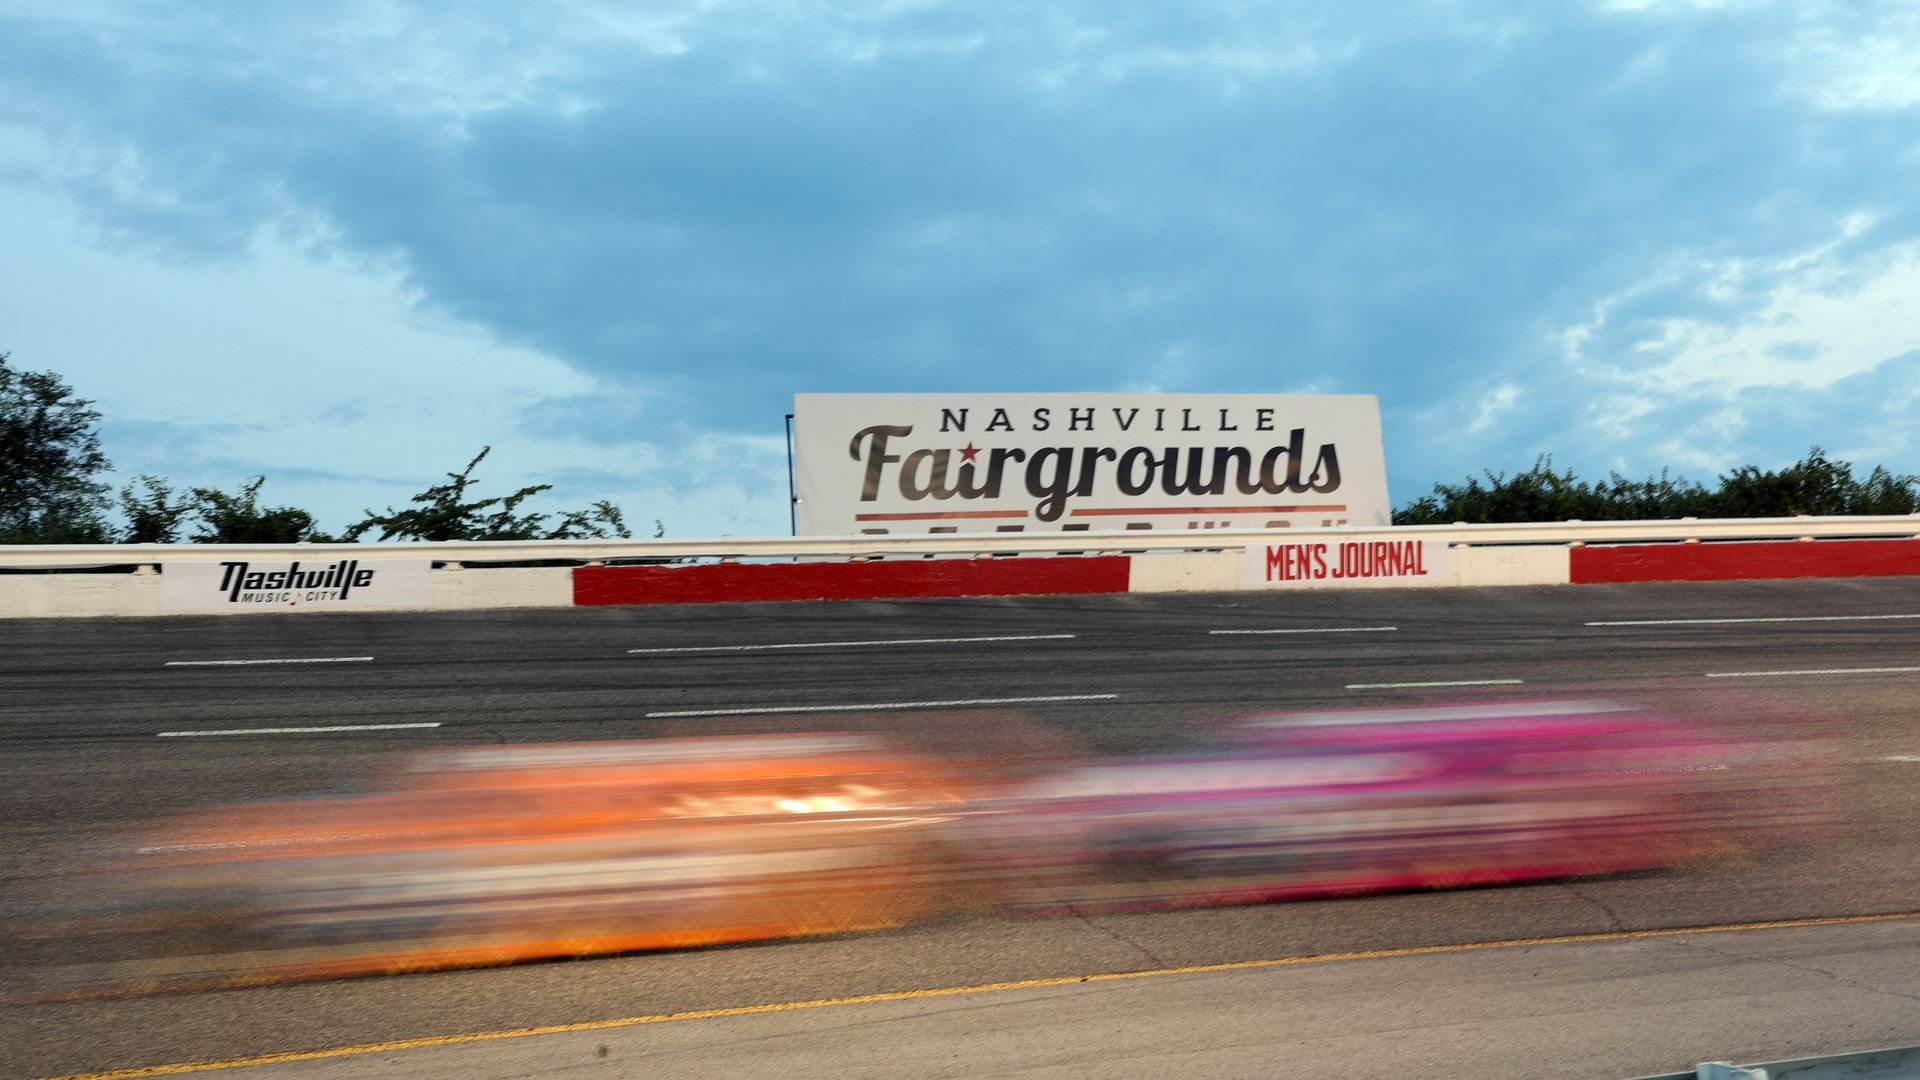 Cars race around the Nashville fairgrounds racetrack